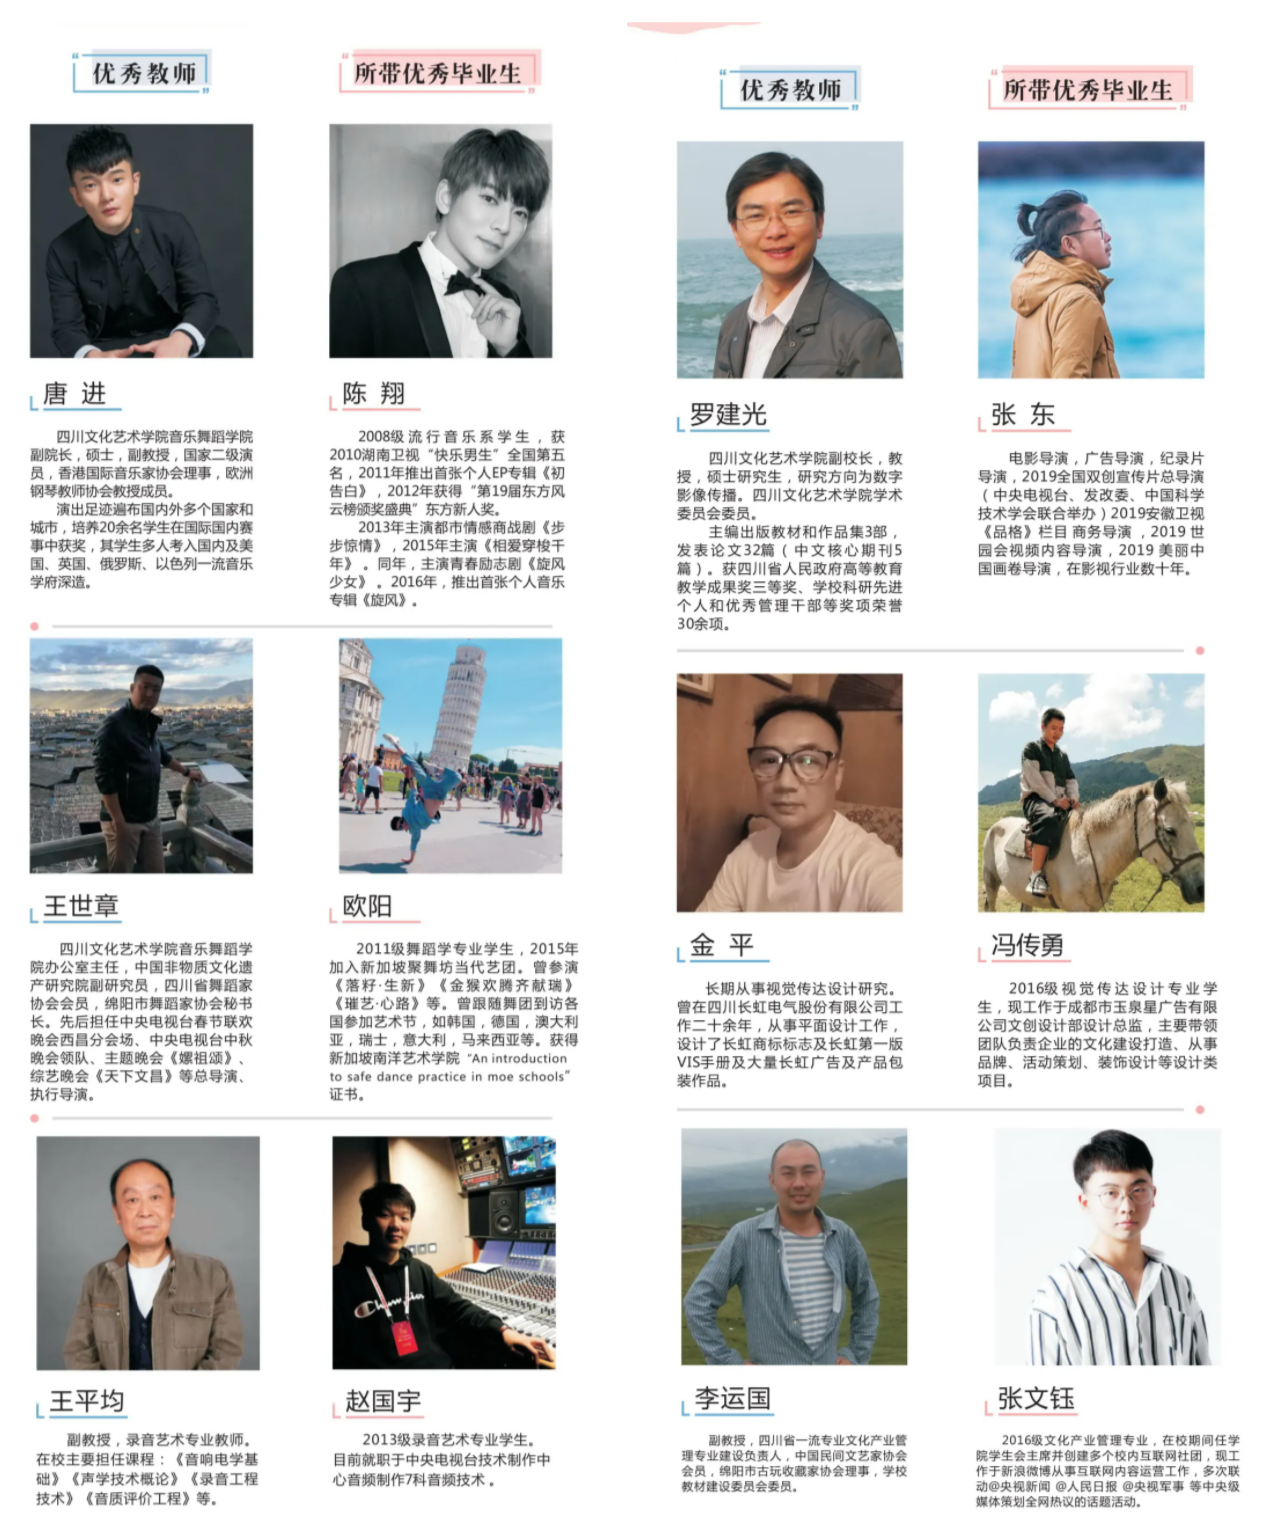 FireShot Capture 019 - 四川文化艺术学院2021年招生宣传册 - mp.weixin.qq.com.png